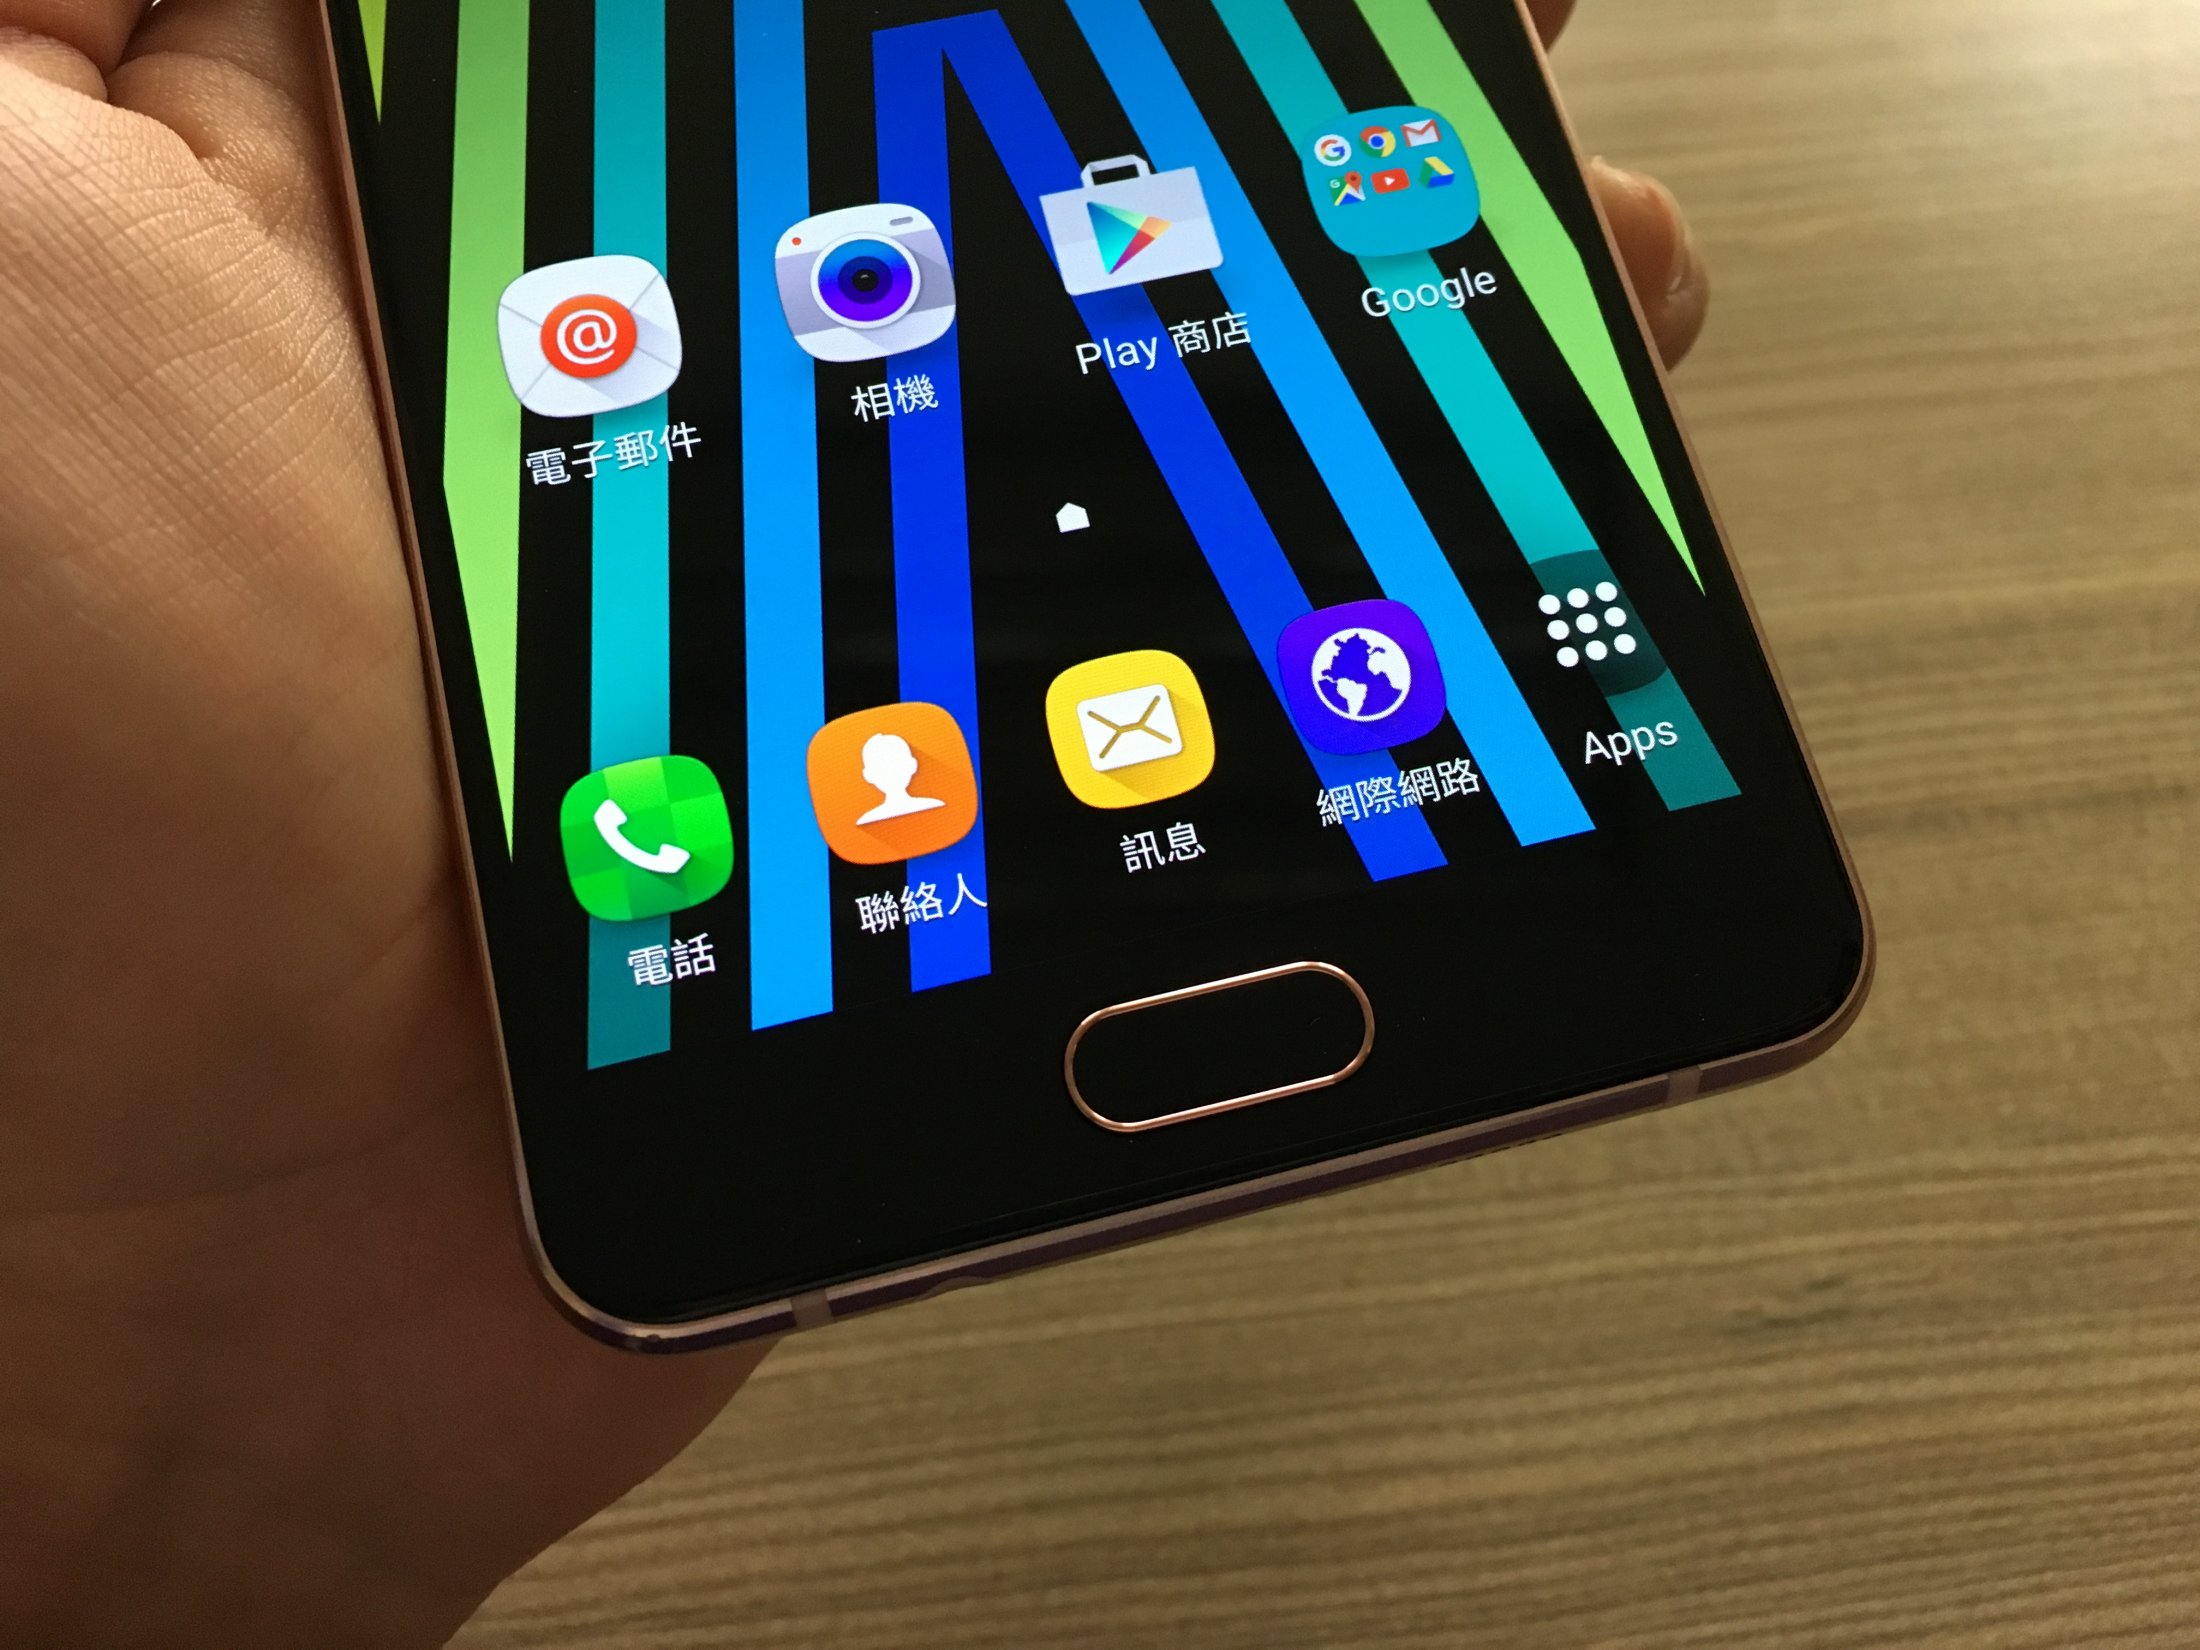 Samsung Galaxy A5 (2016) 深入评测：何不放手一搏？